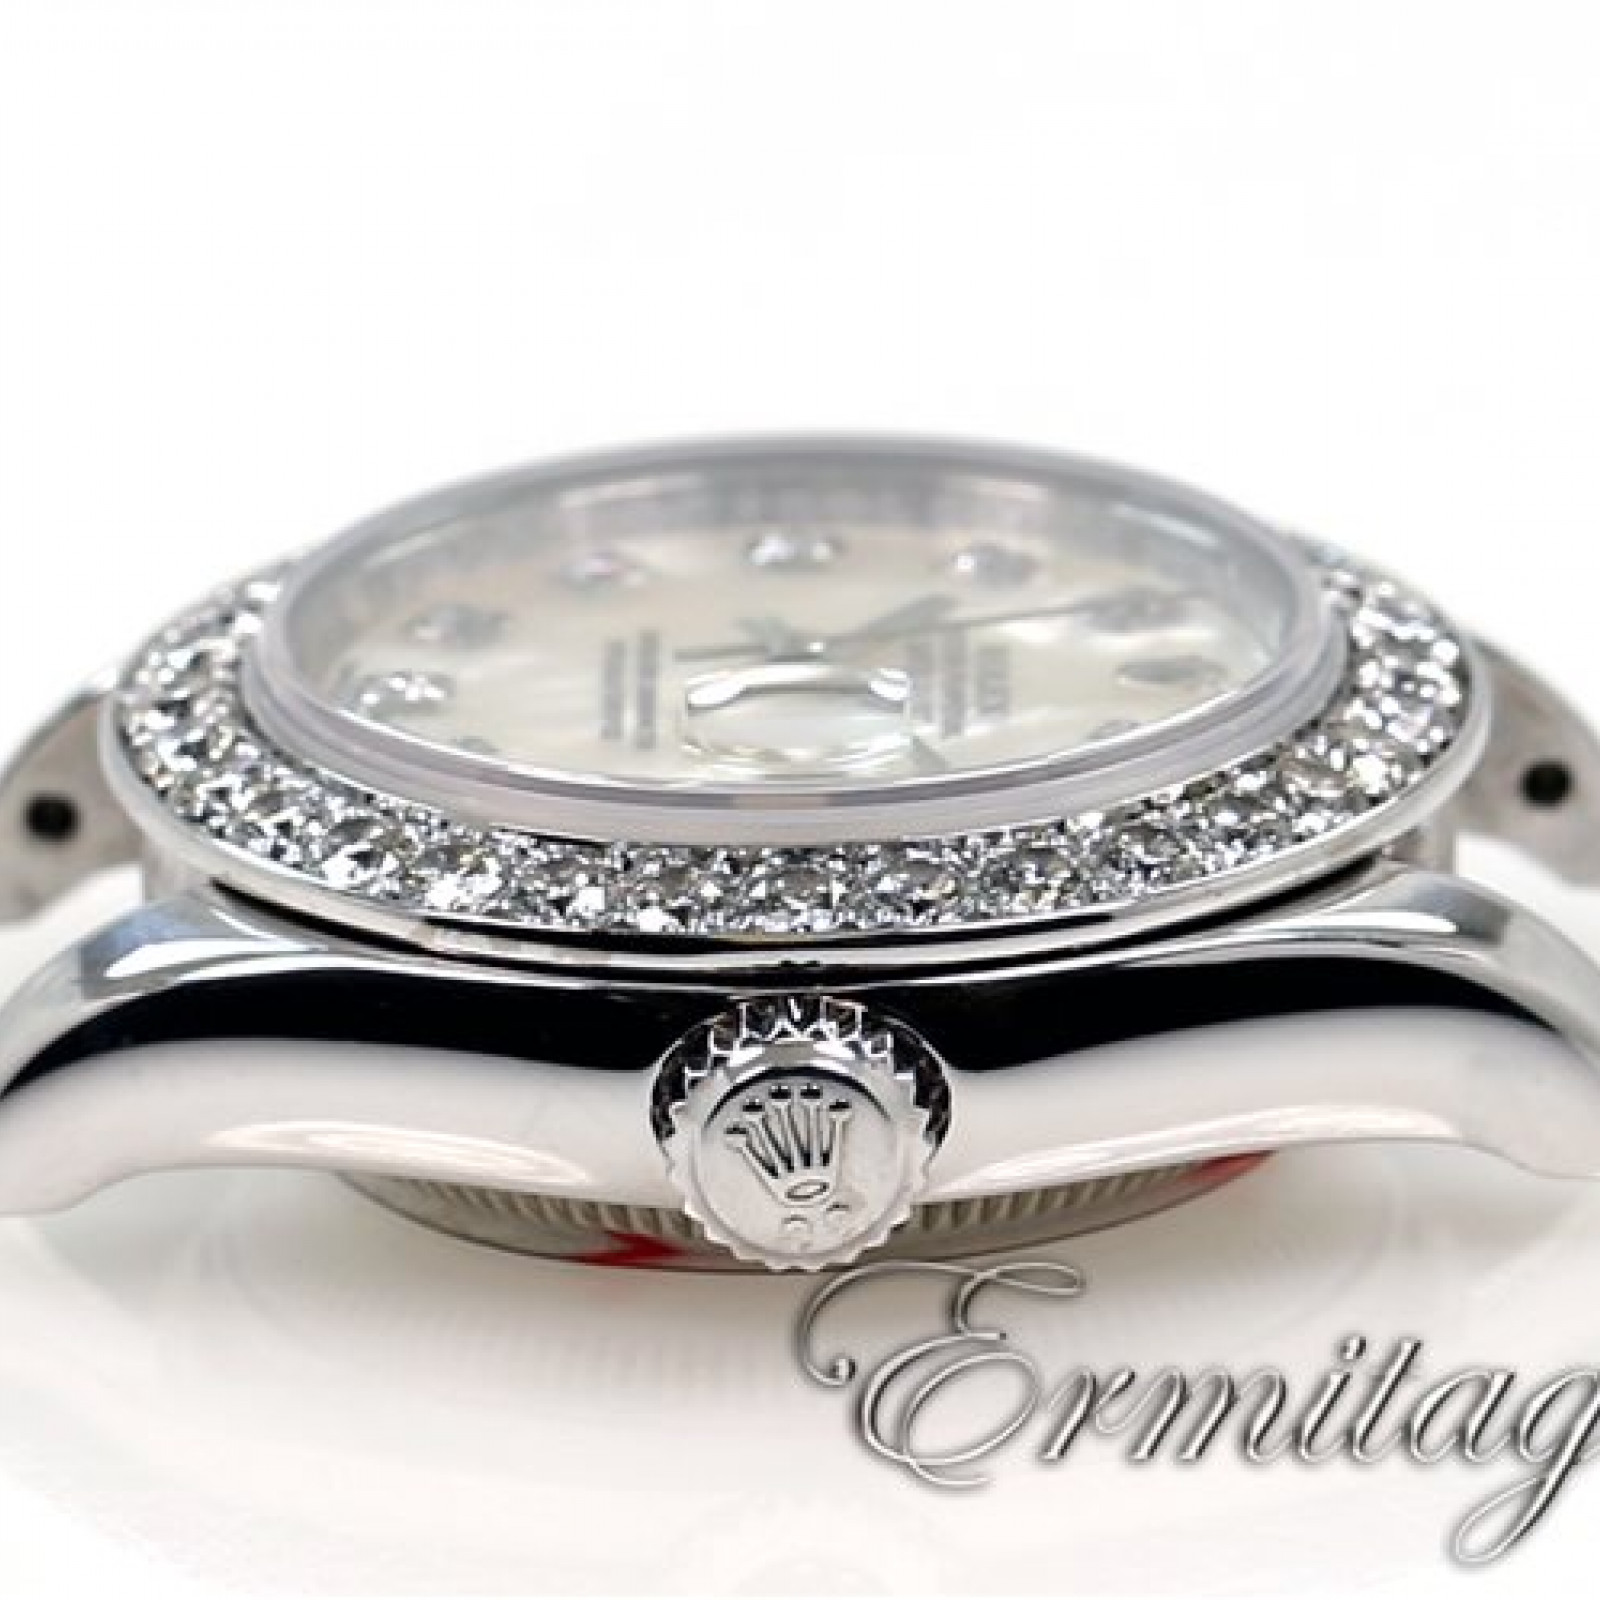 White Diamond Bezel & Dial Rolex Datejust Pearlmaster 80299